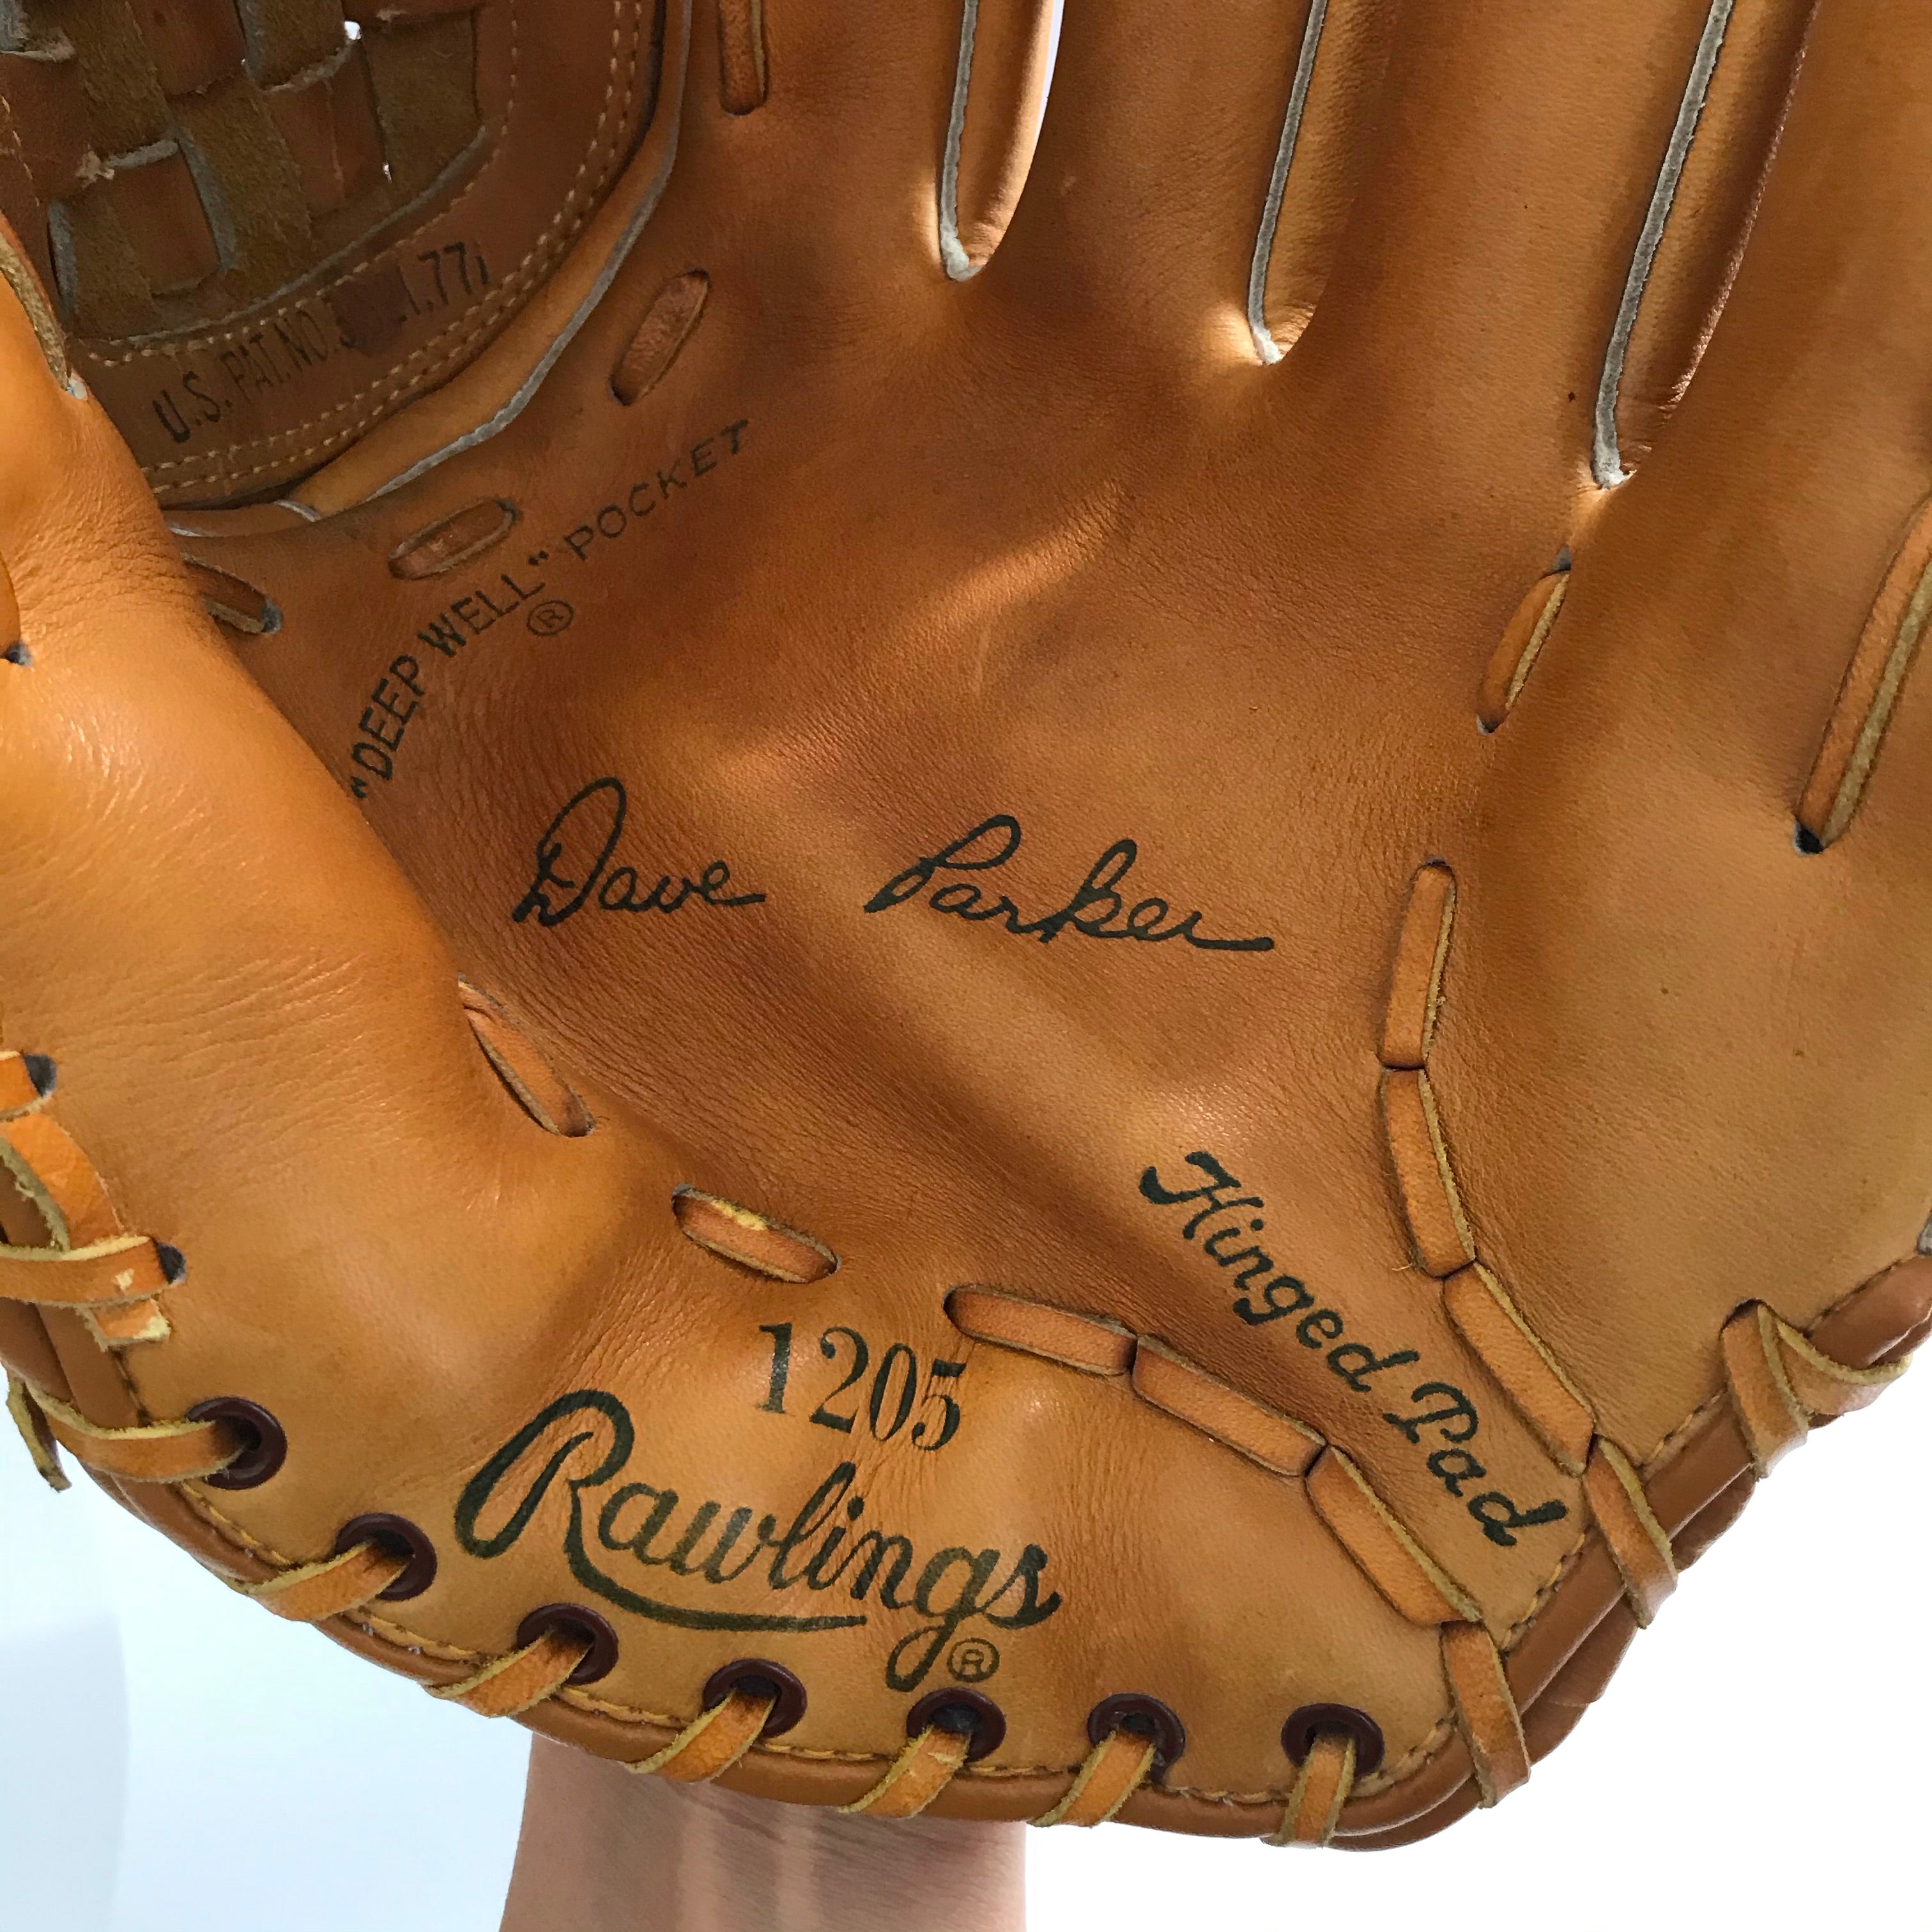 Rawlings 1205 Dave Parker 12" Fastback Baseball Glove Pittsburgh Pirates